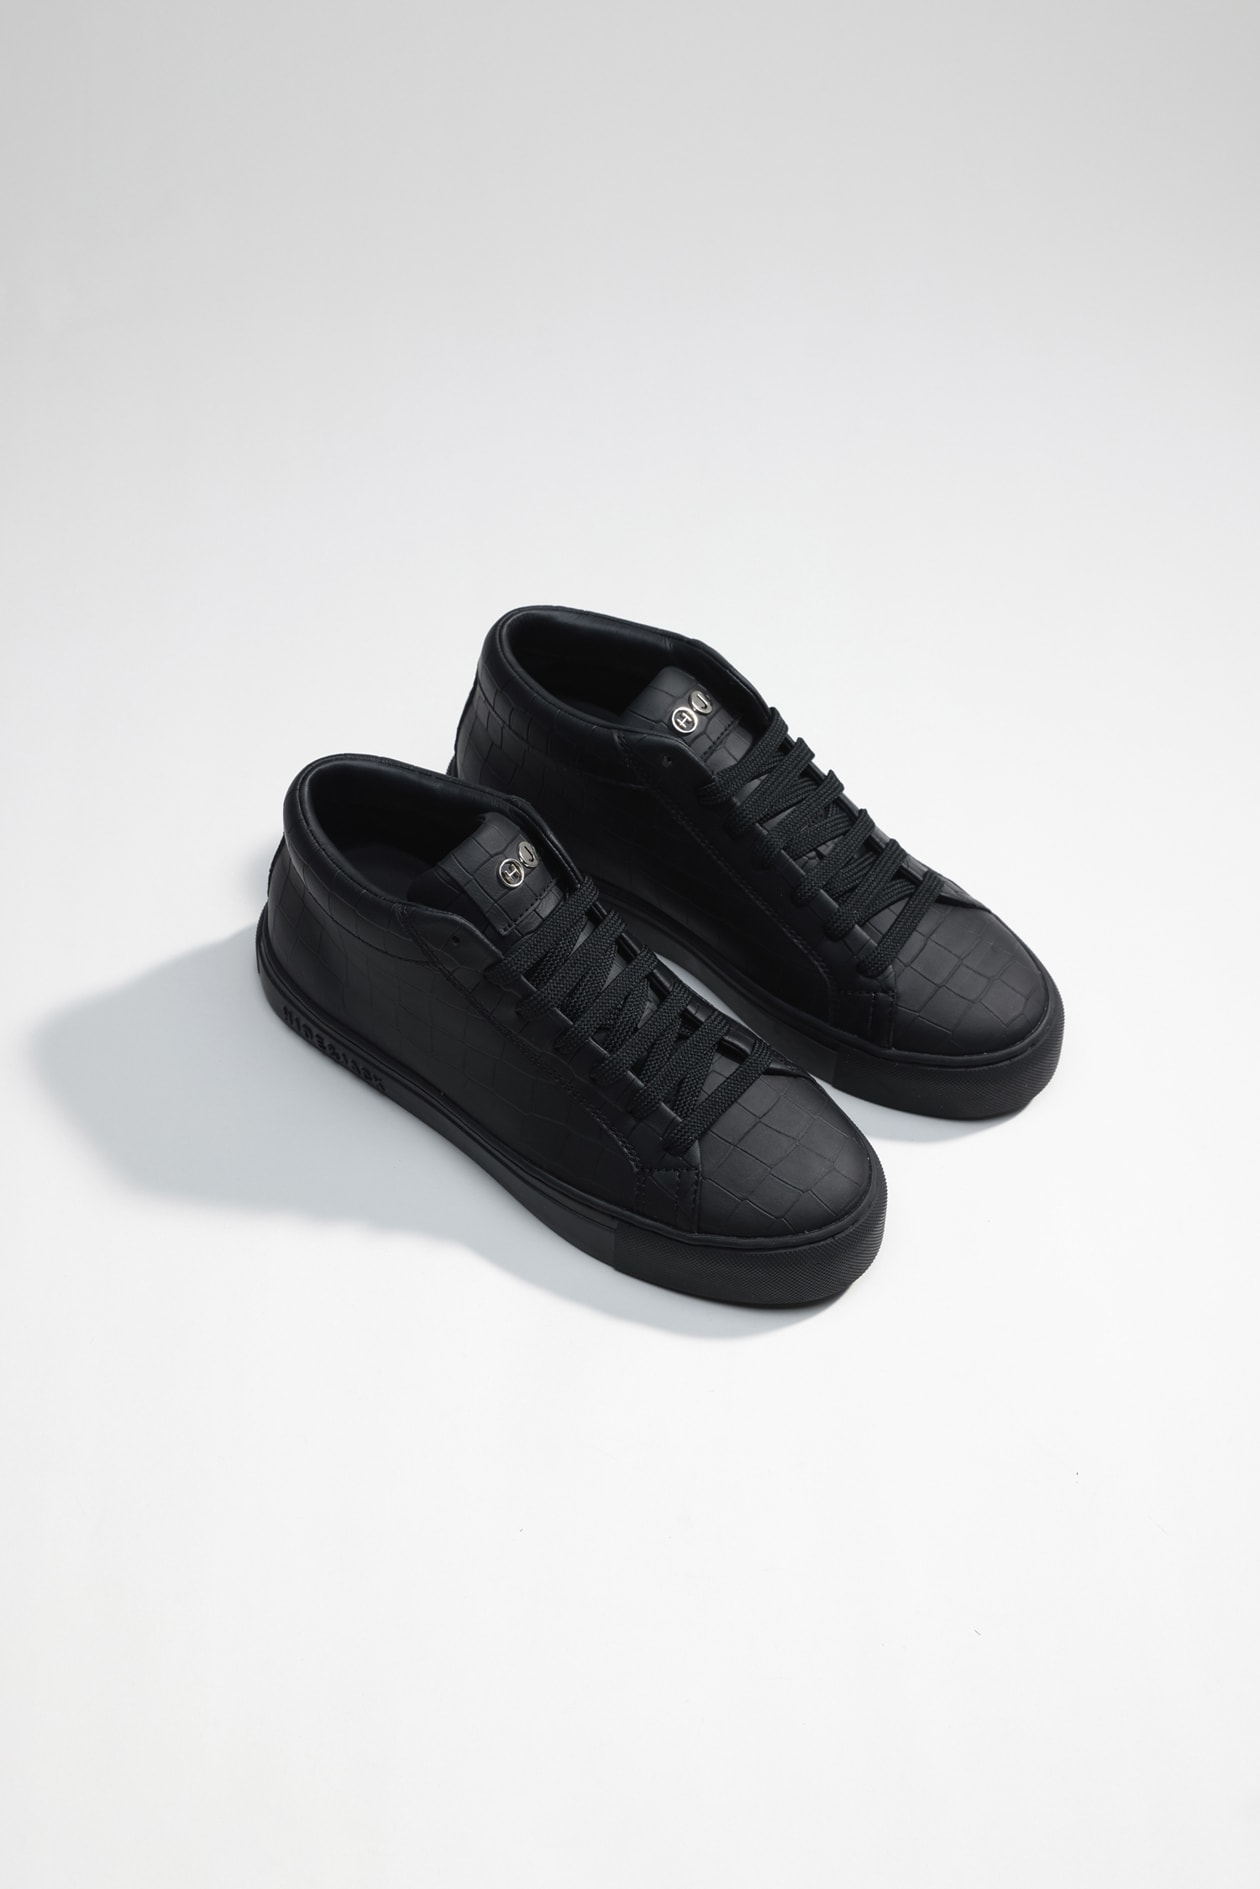 Hide&amp;jack High Top Sneaker - Essence Black Black